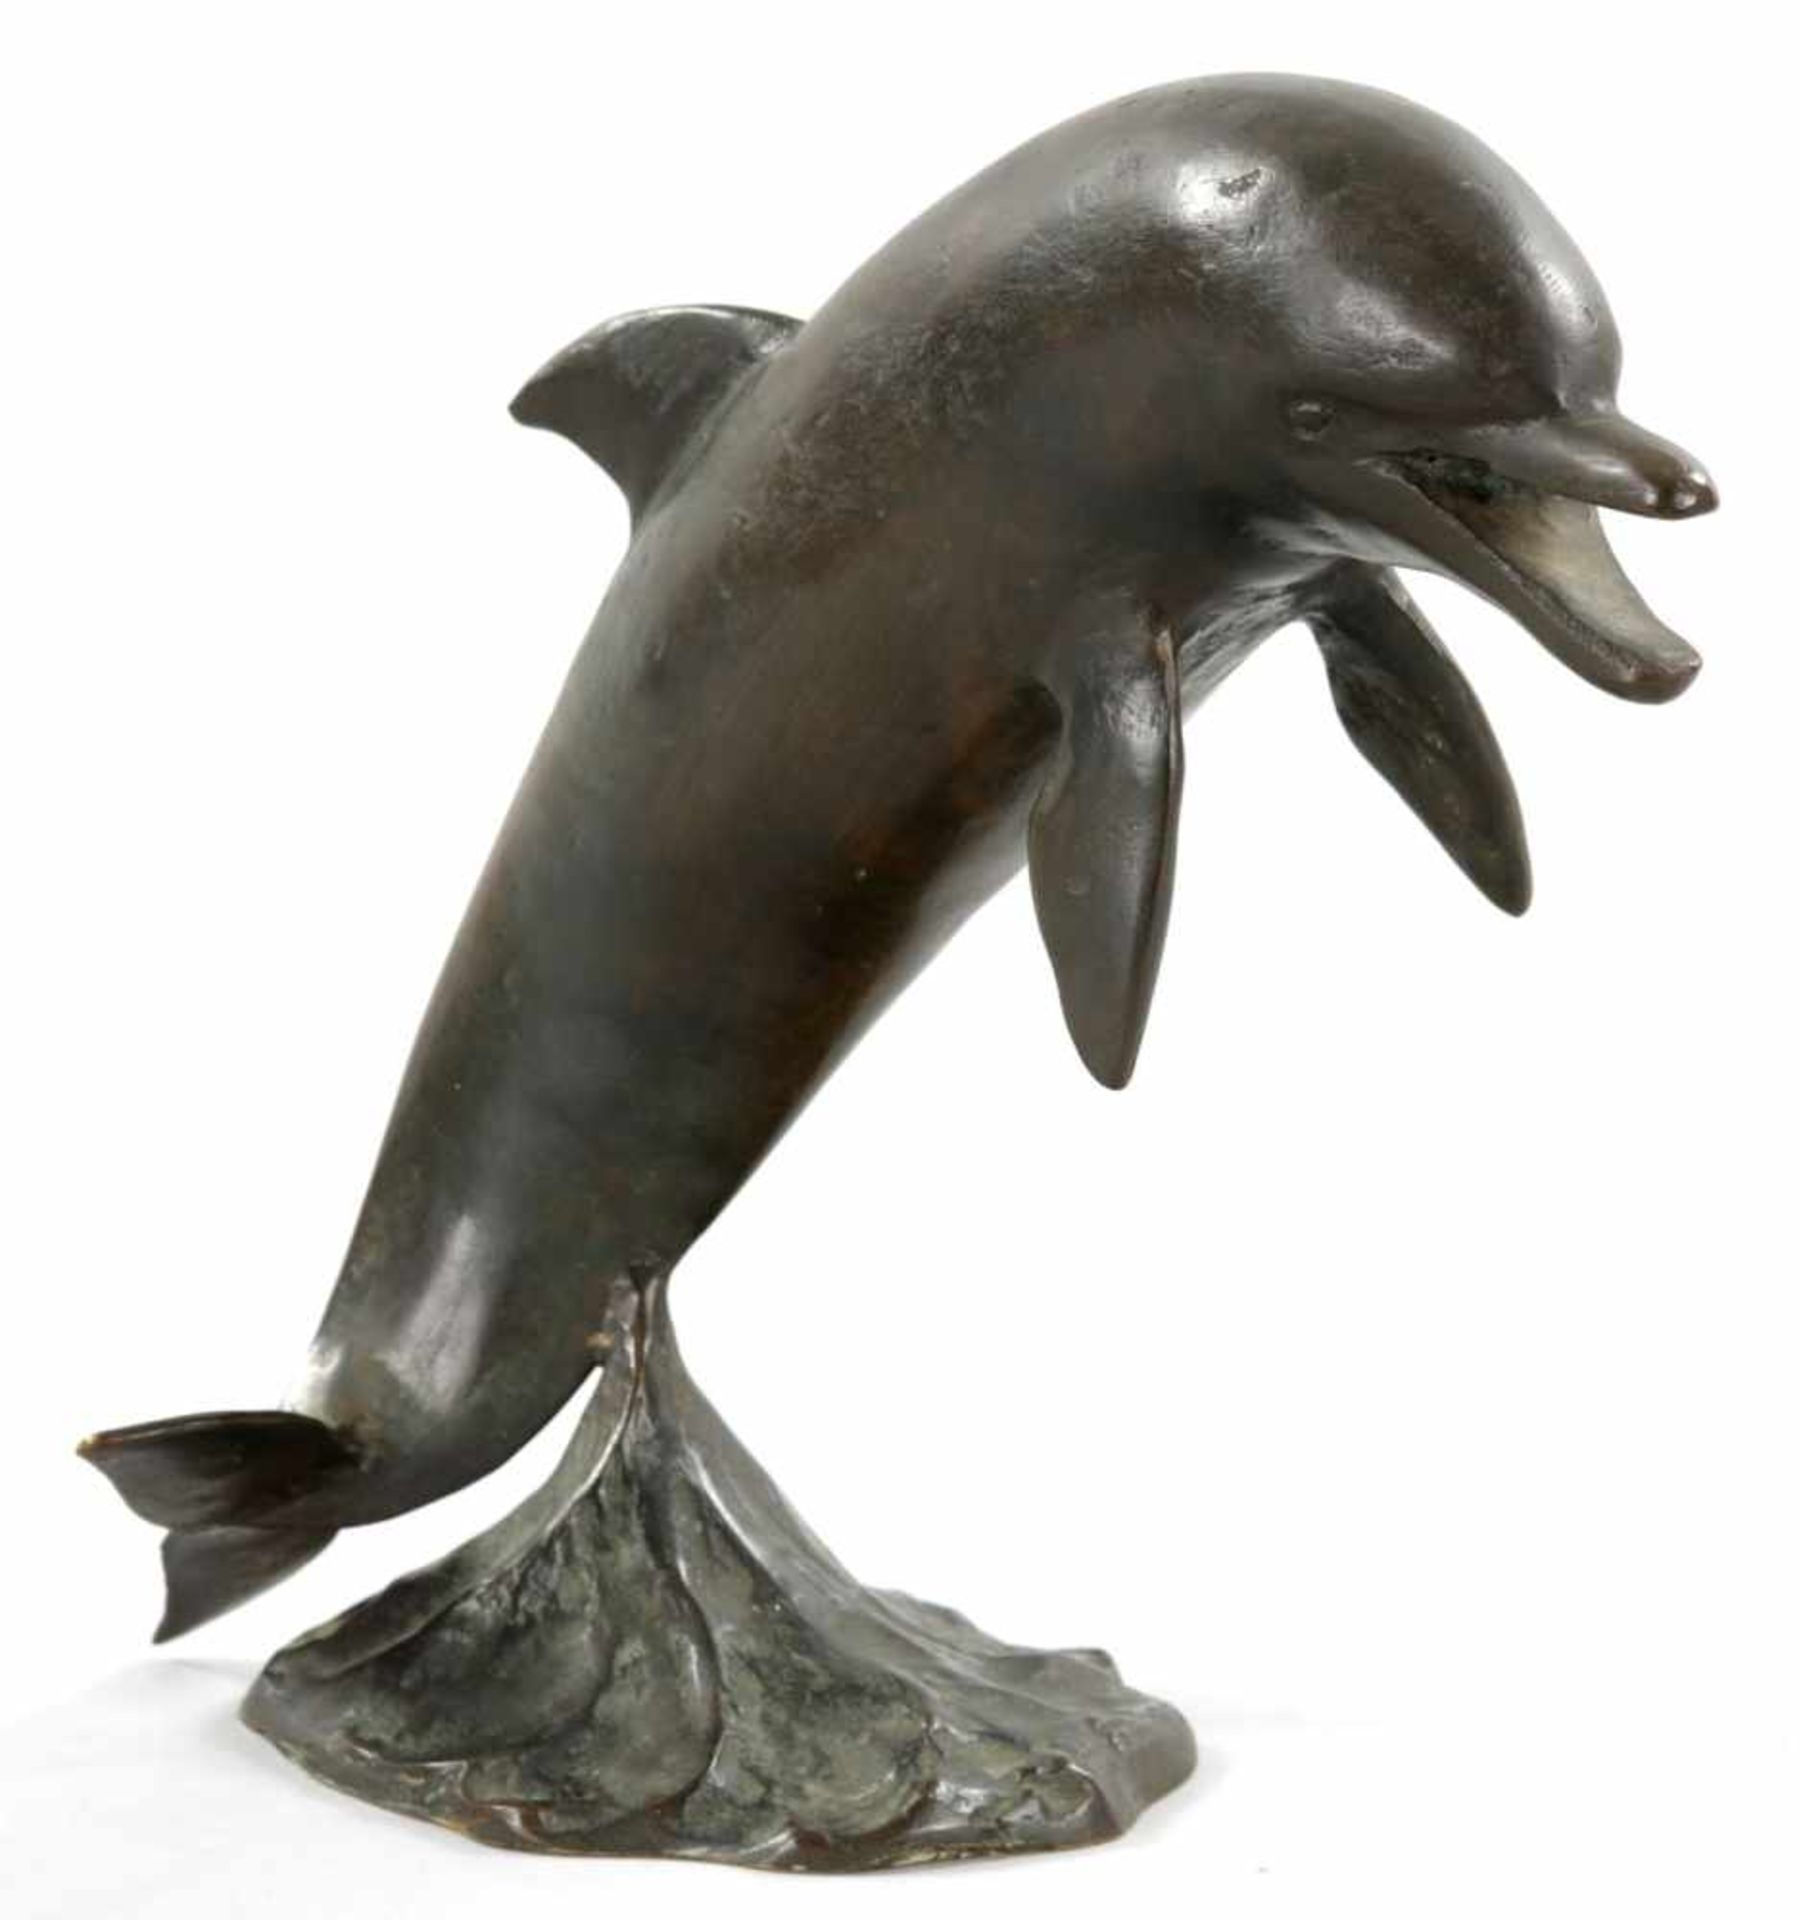 Rose Marie Stiller1920 Berlin - 1993 ebd. Springender Delphin auf ovalem Natursockel.- Bronze,